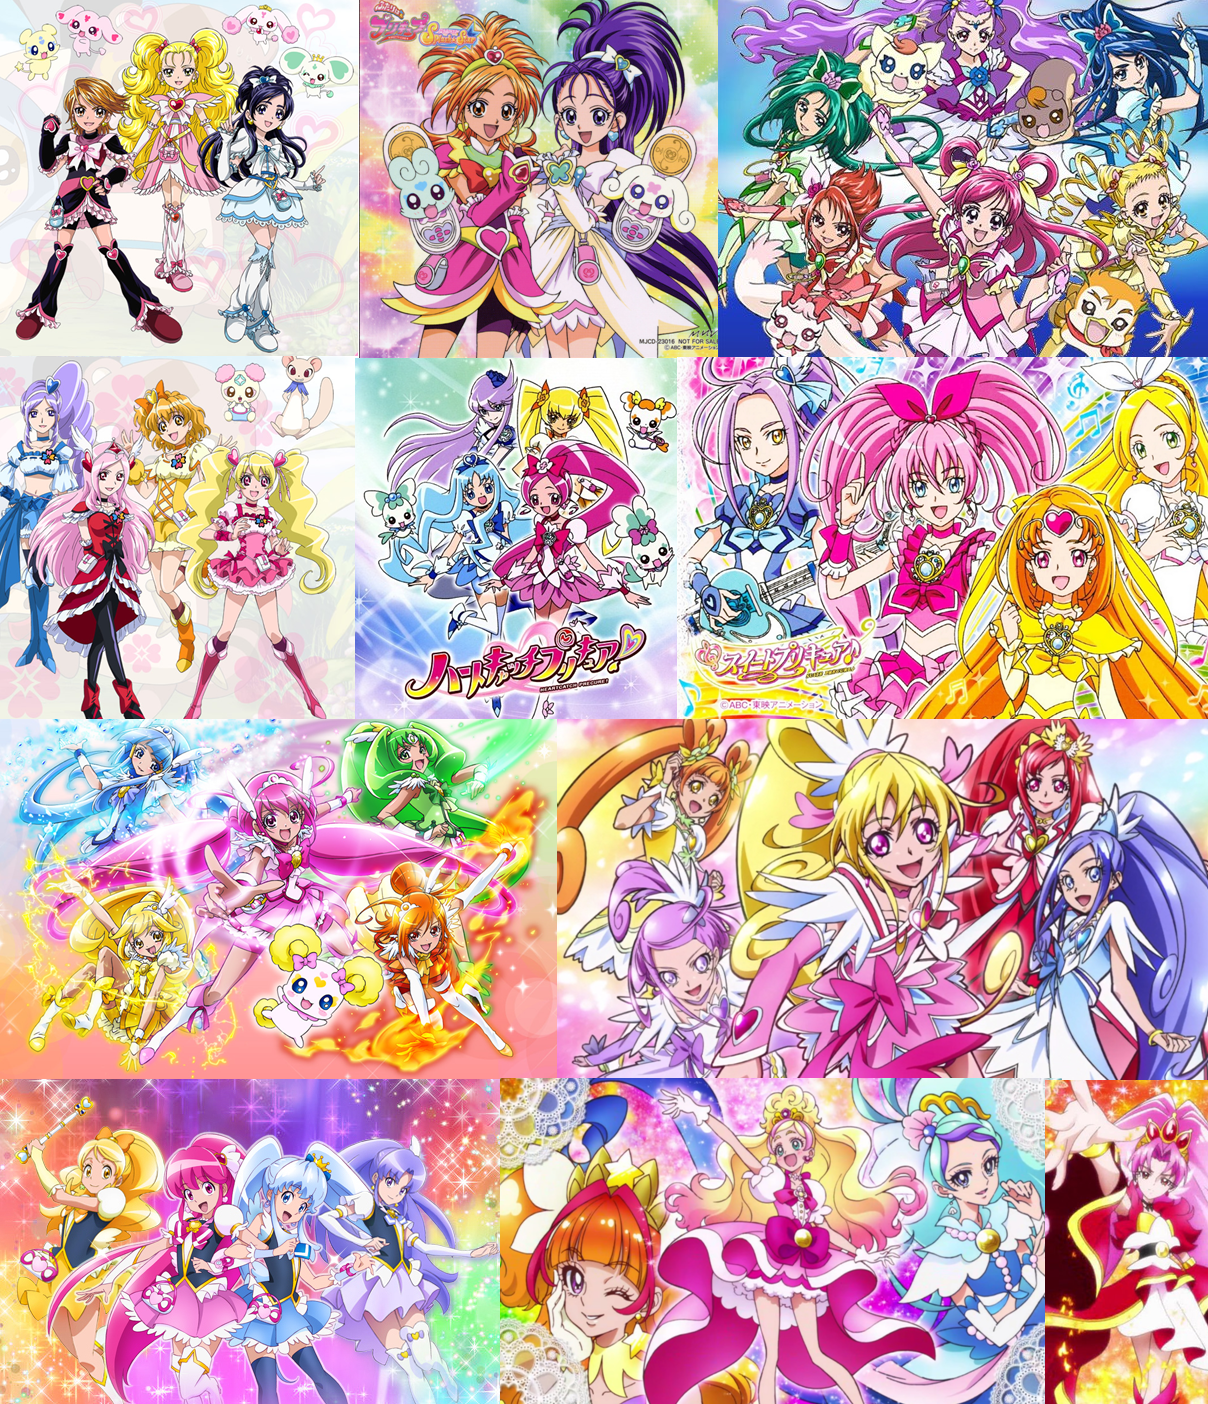 PreCure All-Stars: Zenin Shuugou * Let's Dance! - Dolphin Emulator Wiki